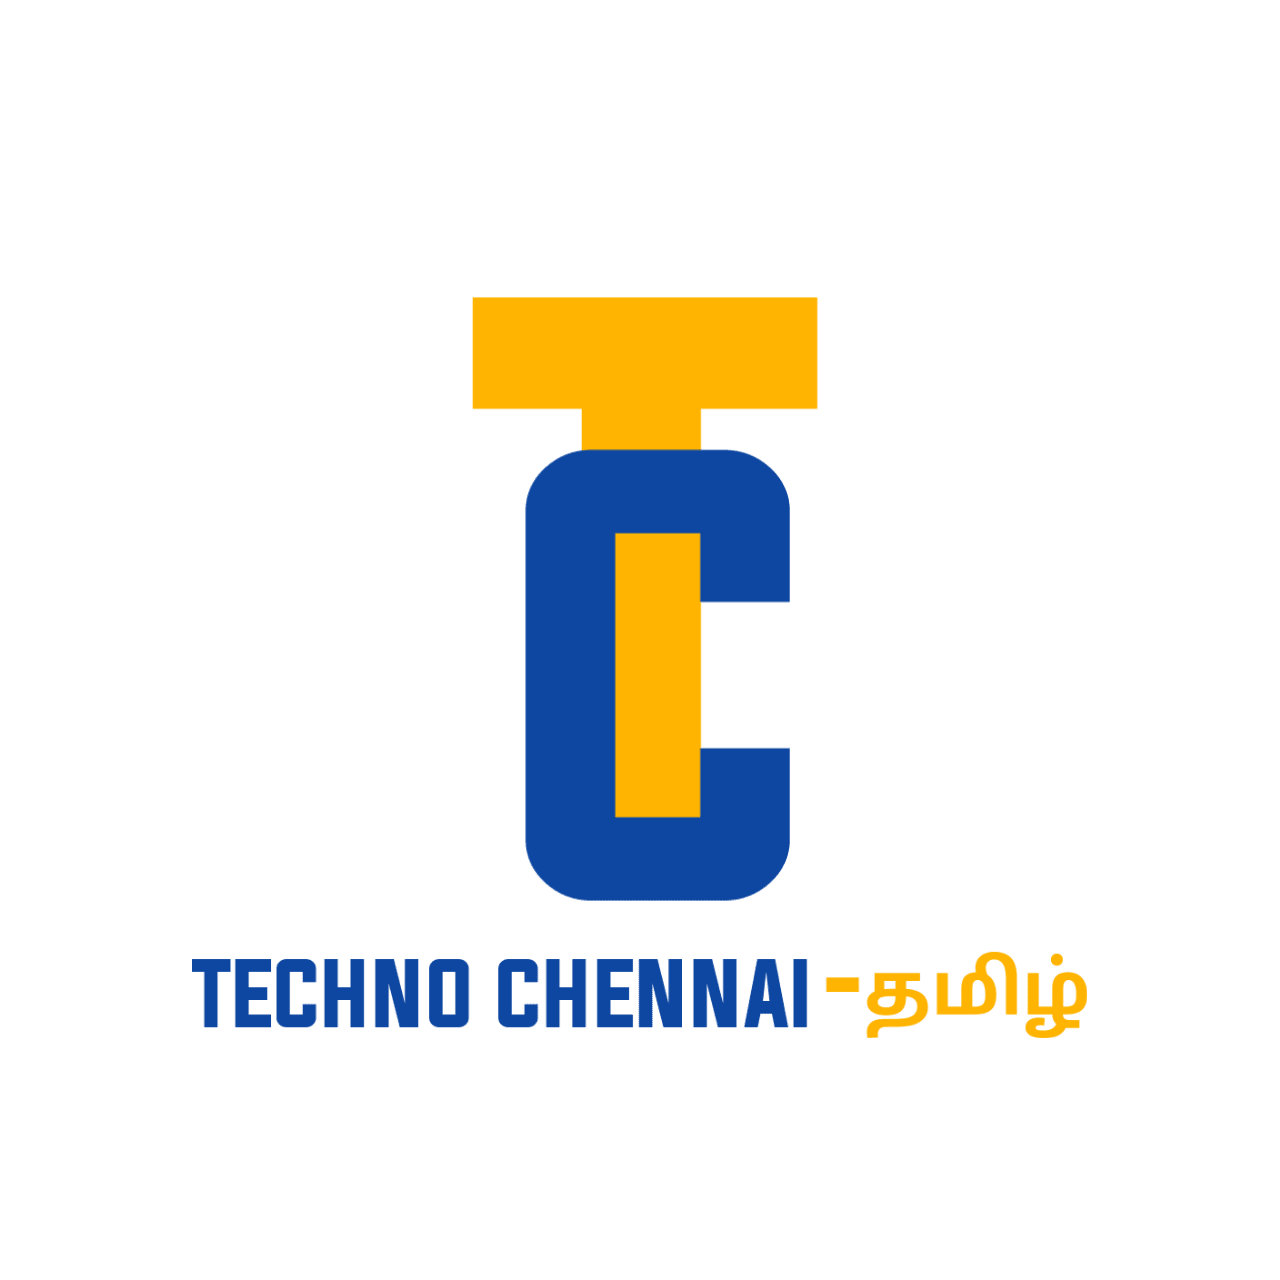 Techno Chennai-தமிழ்